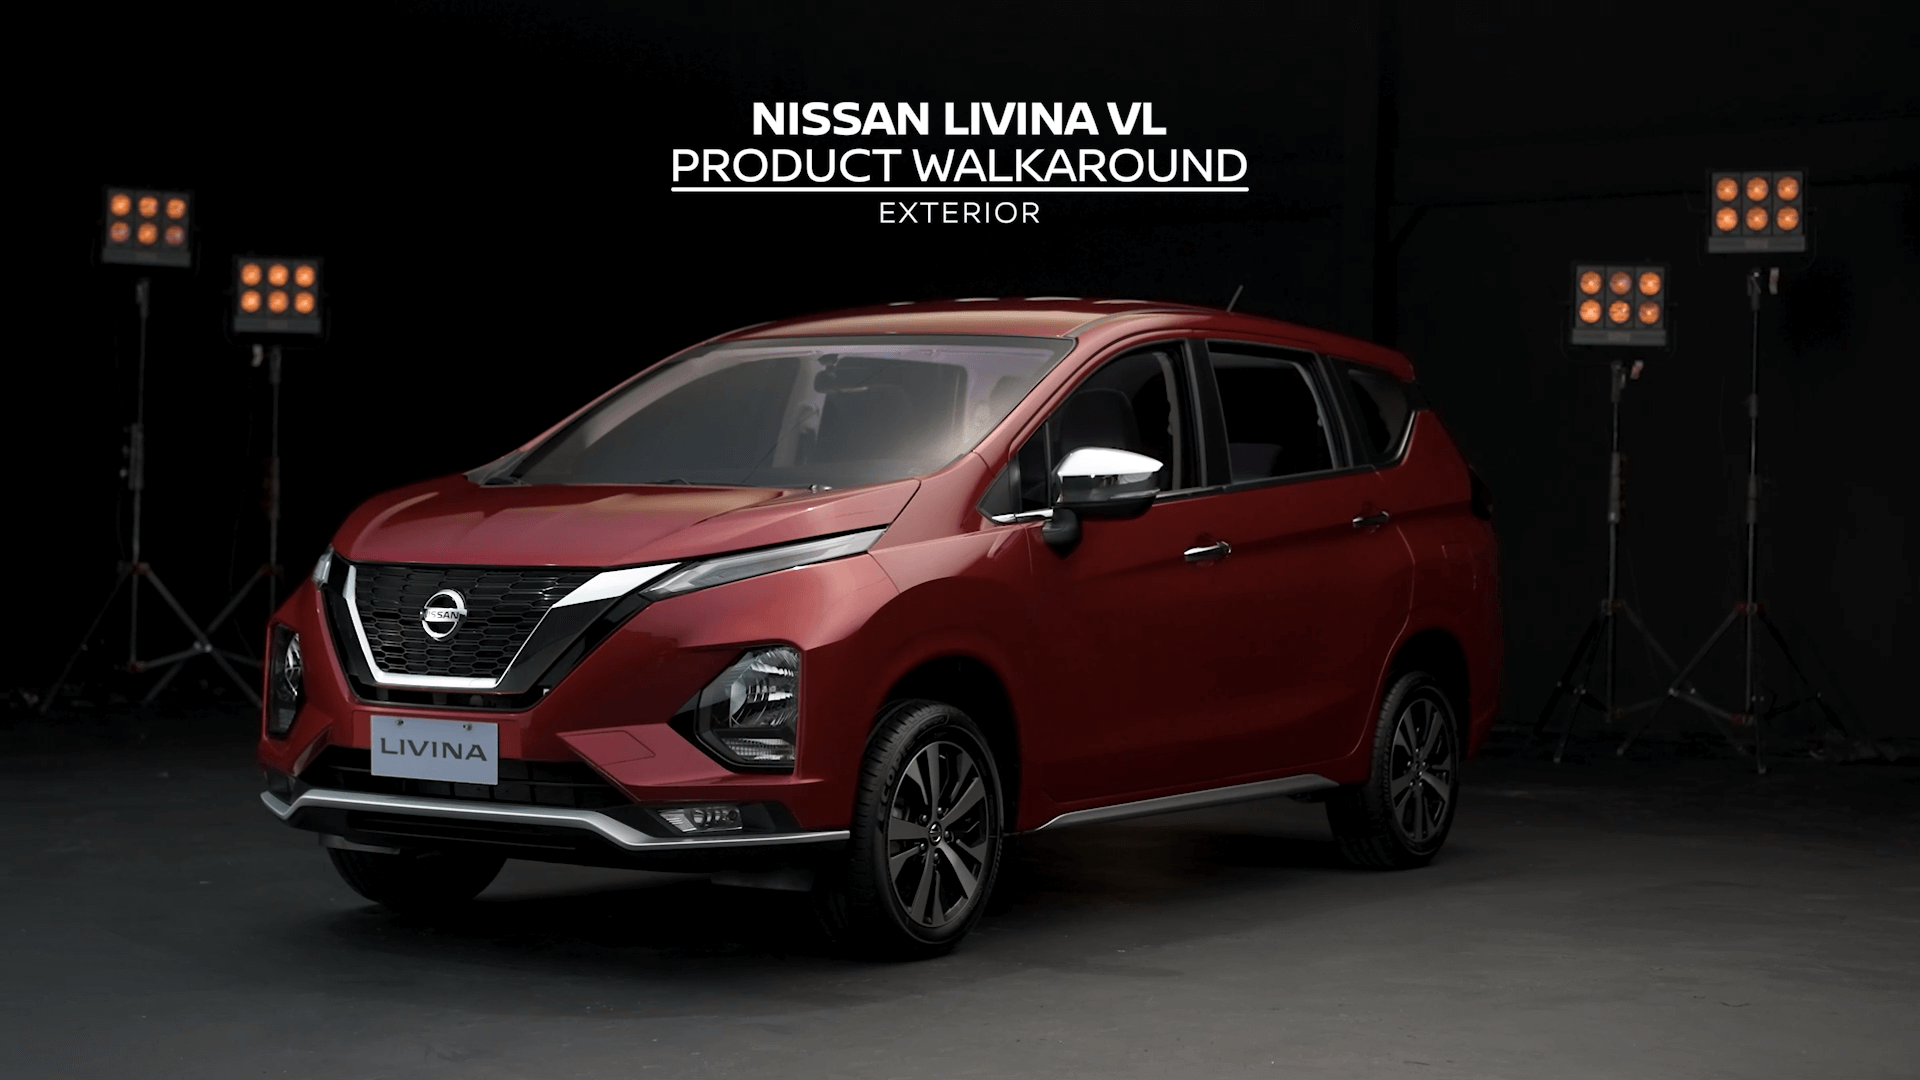 Nissan Livina VL Product Walkaround Exterior poster